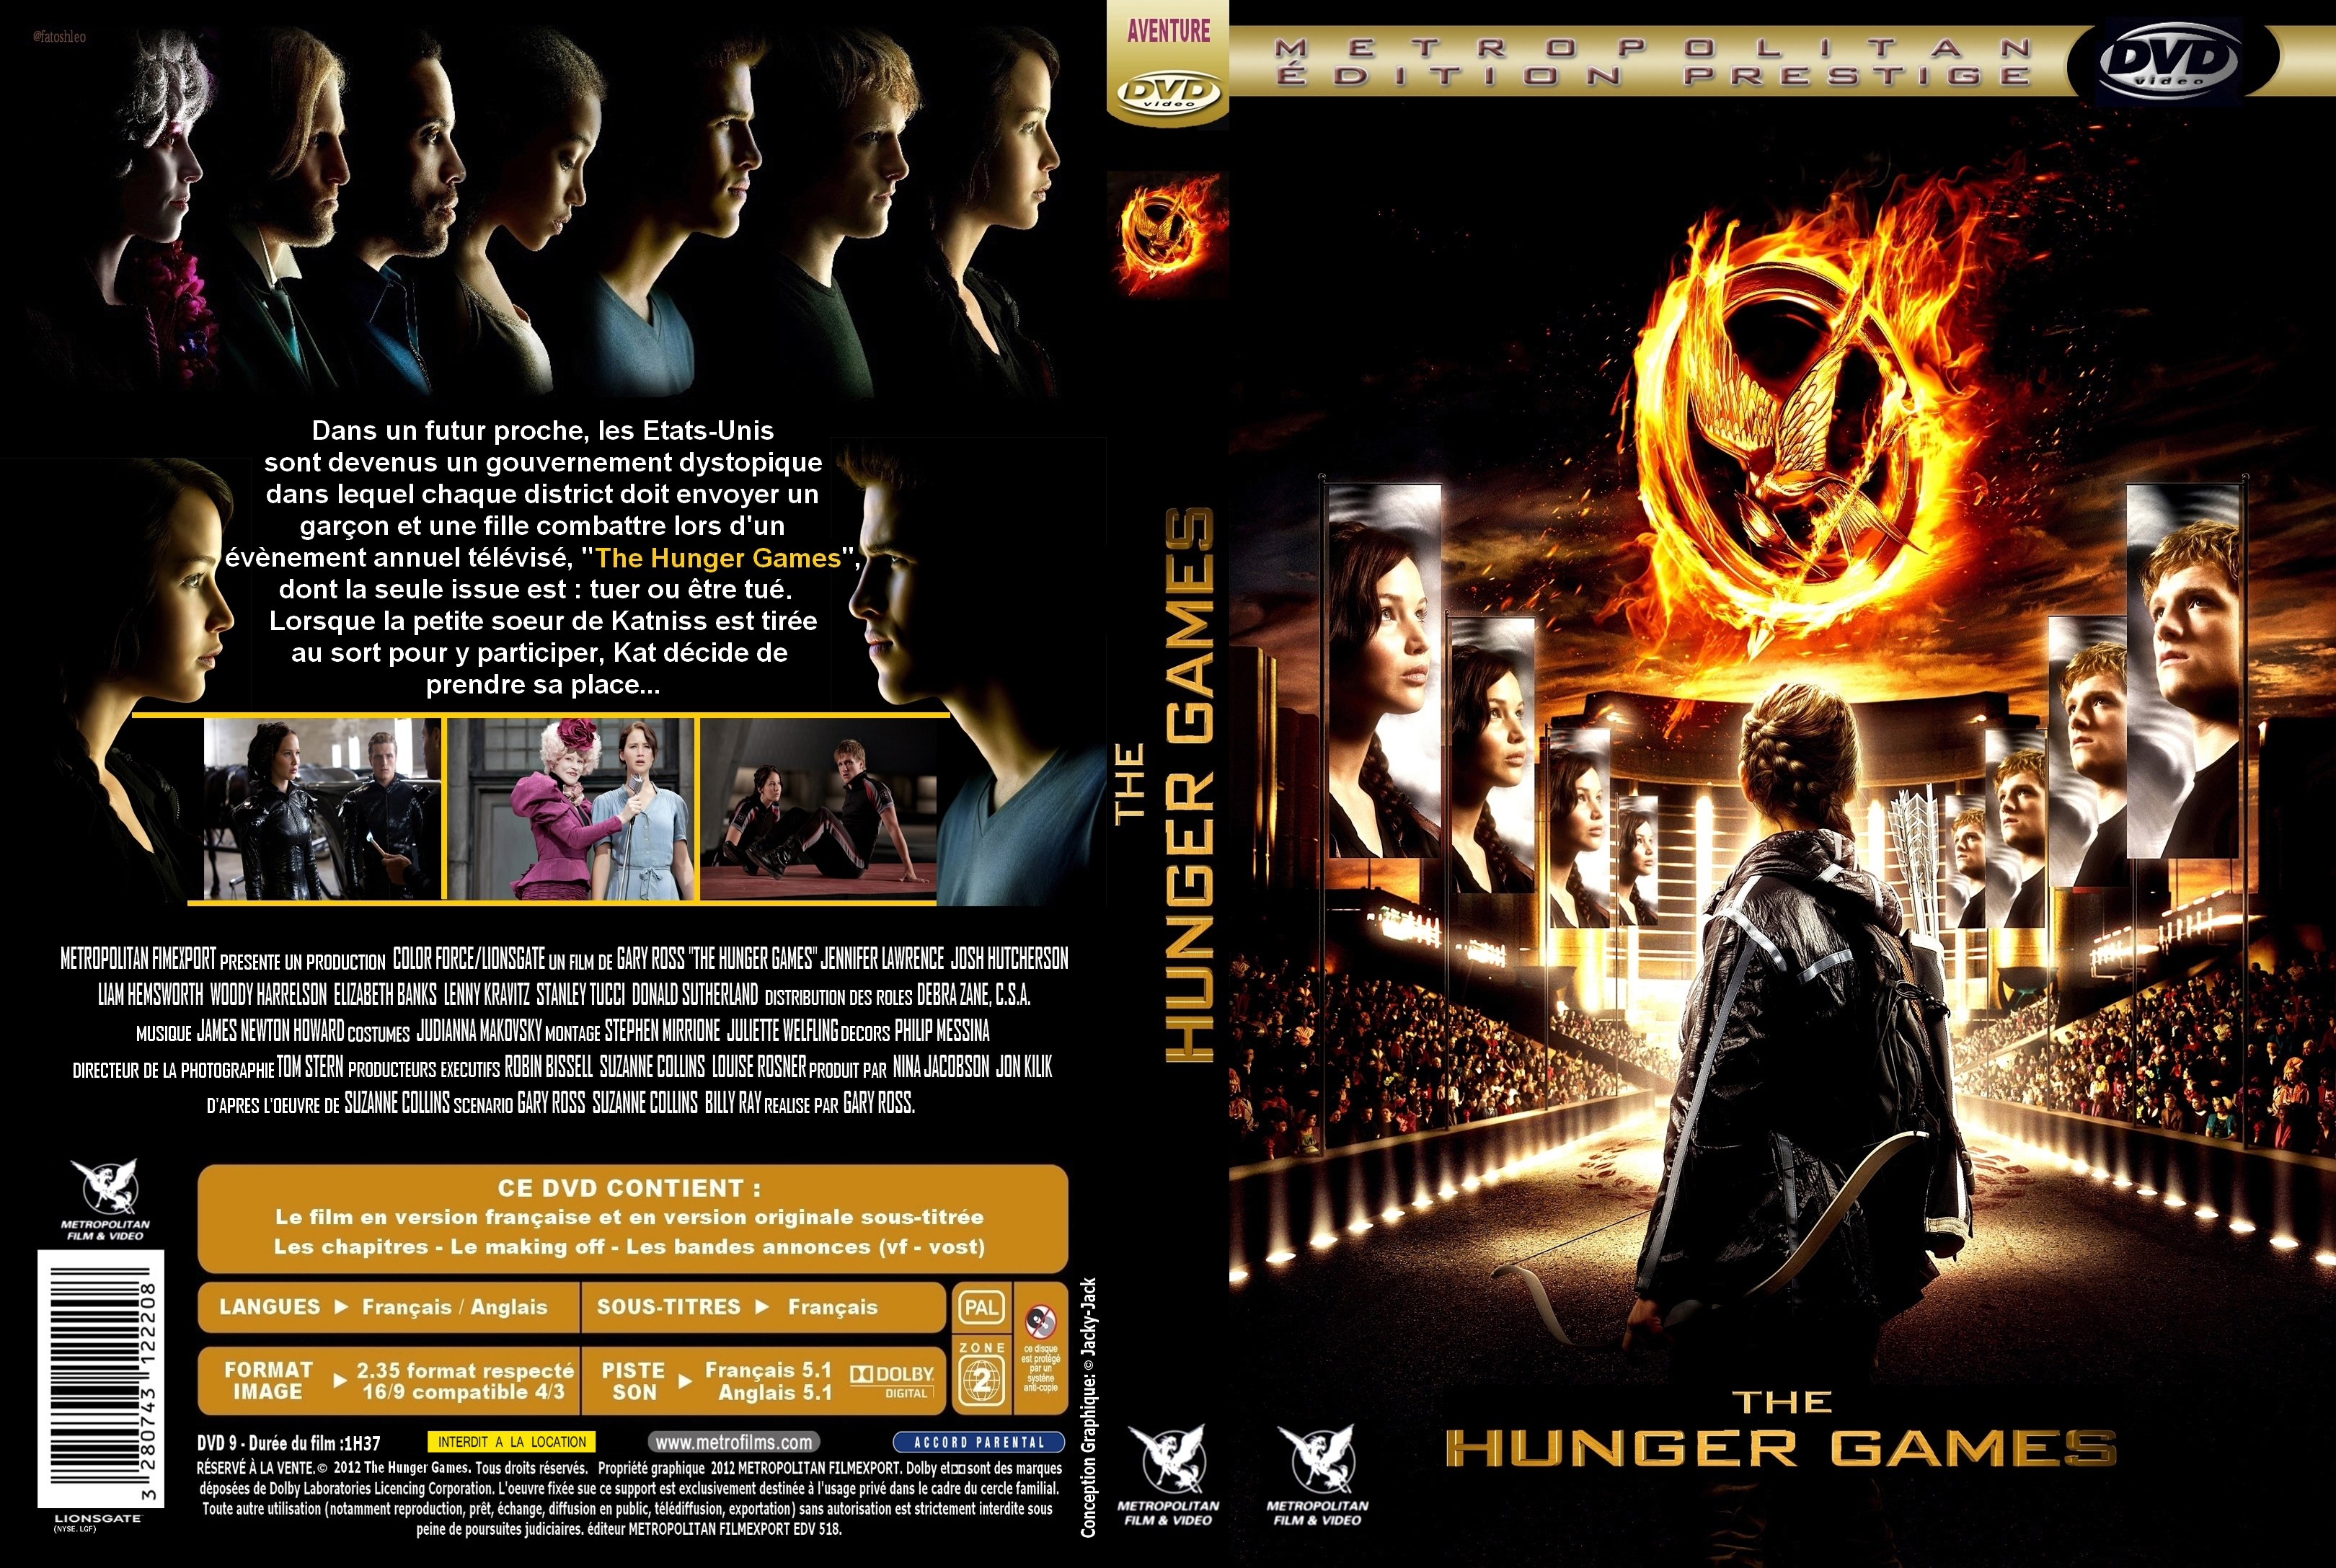 Jaquette DVD Hunger Games custom